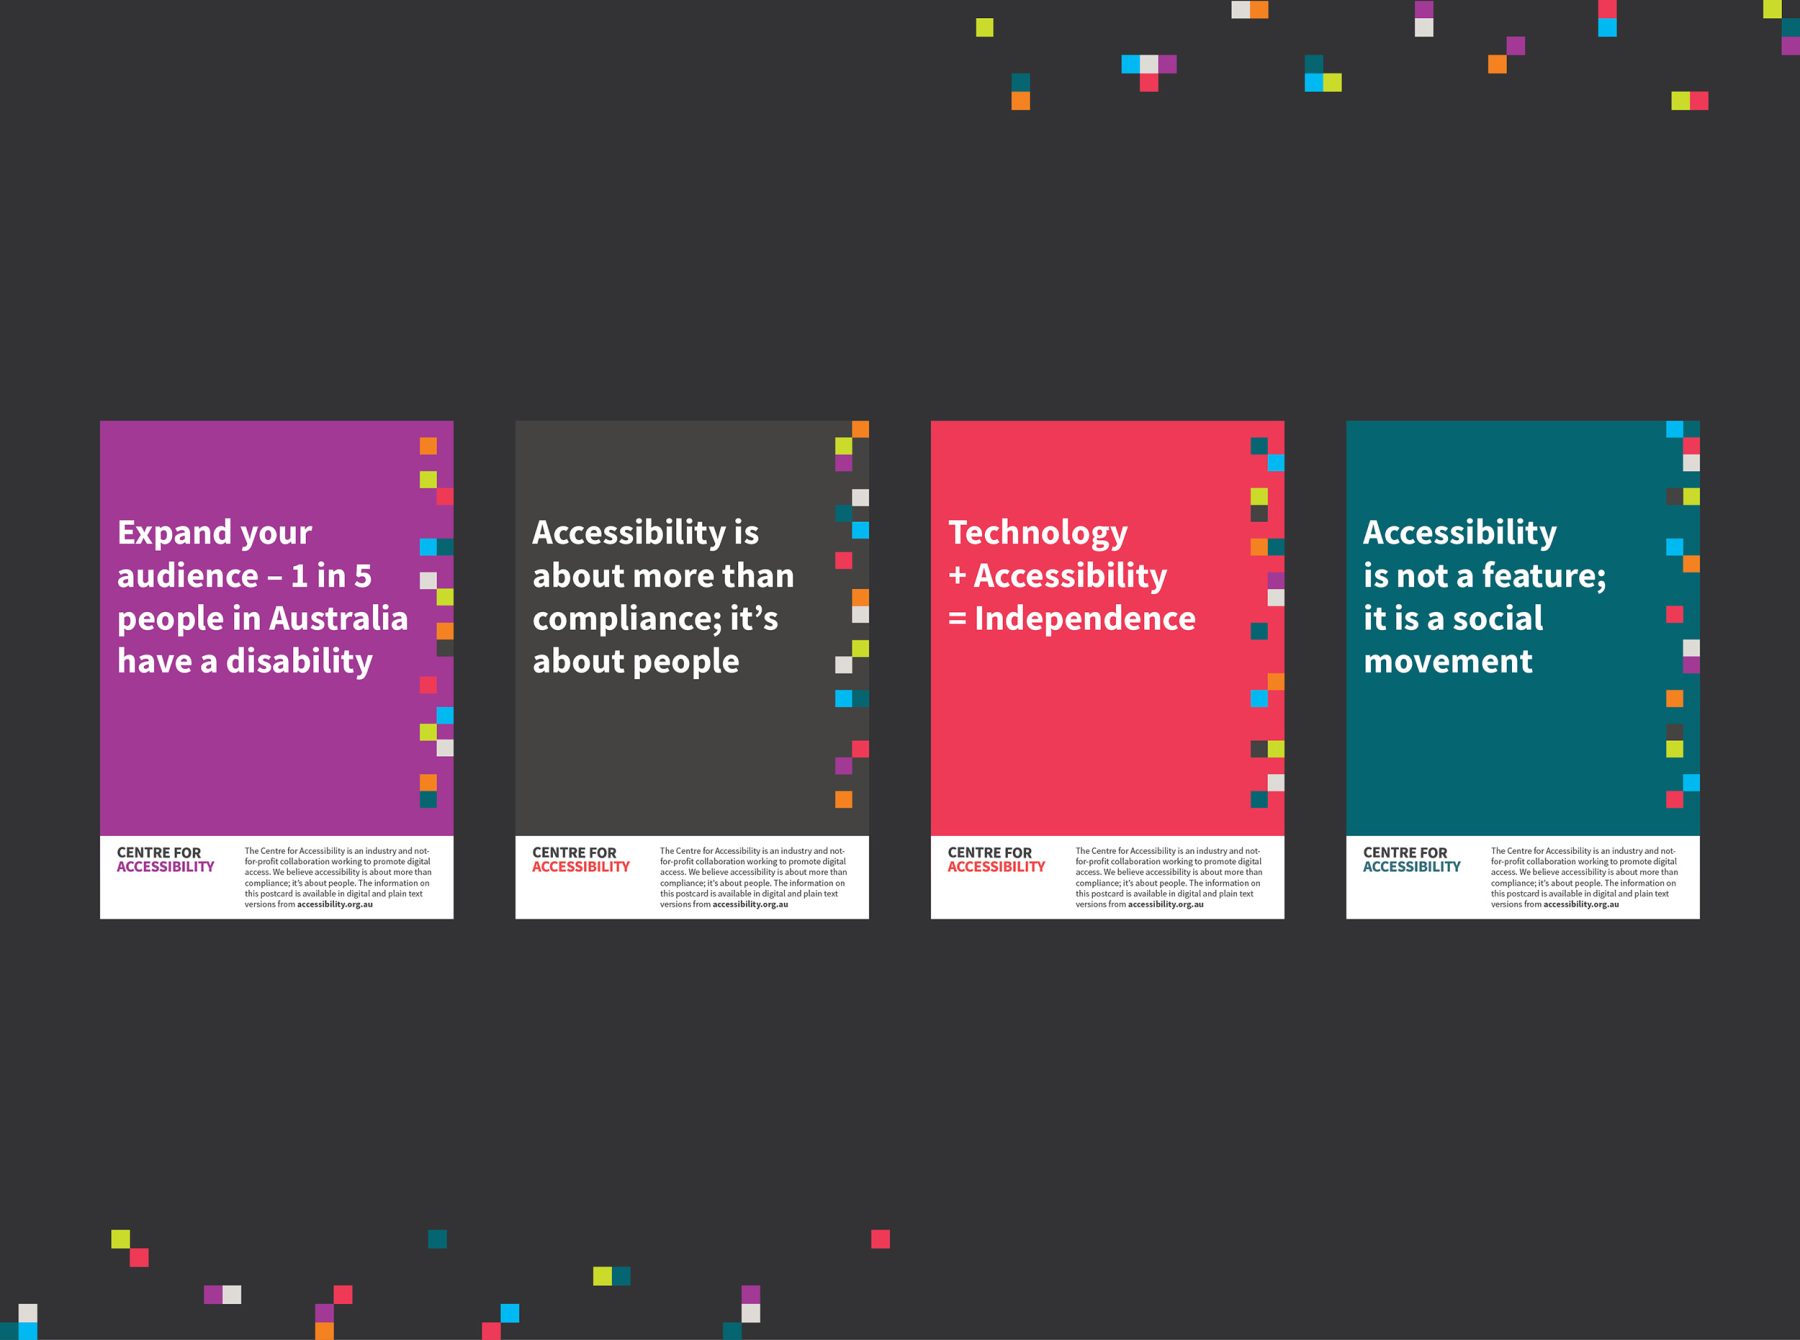 Centre for Accessibility Australia marketing collateral